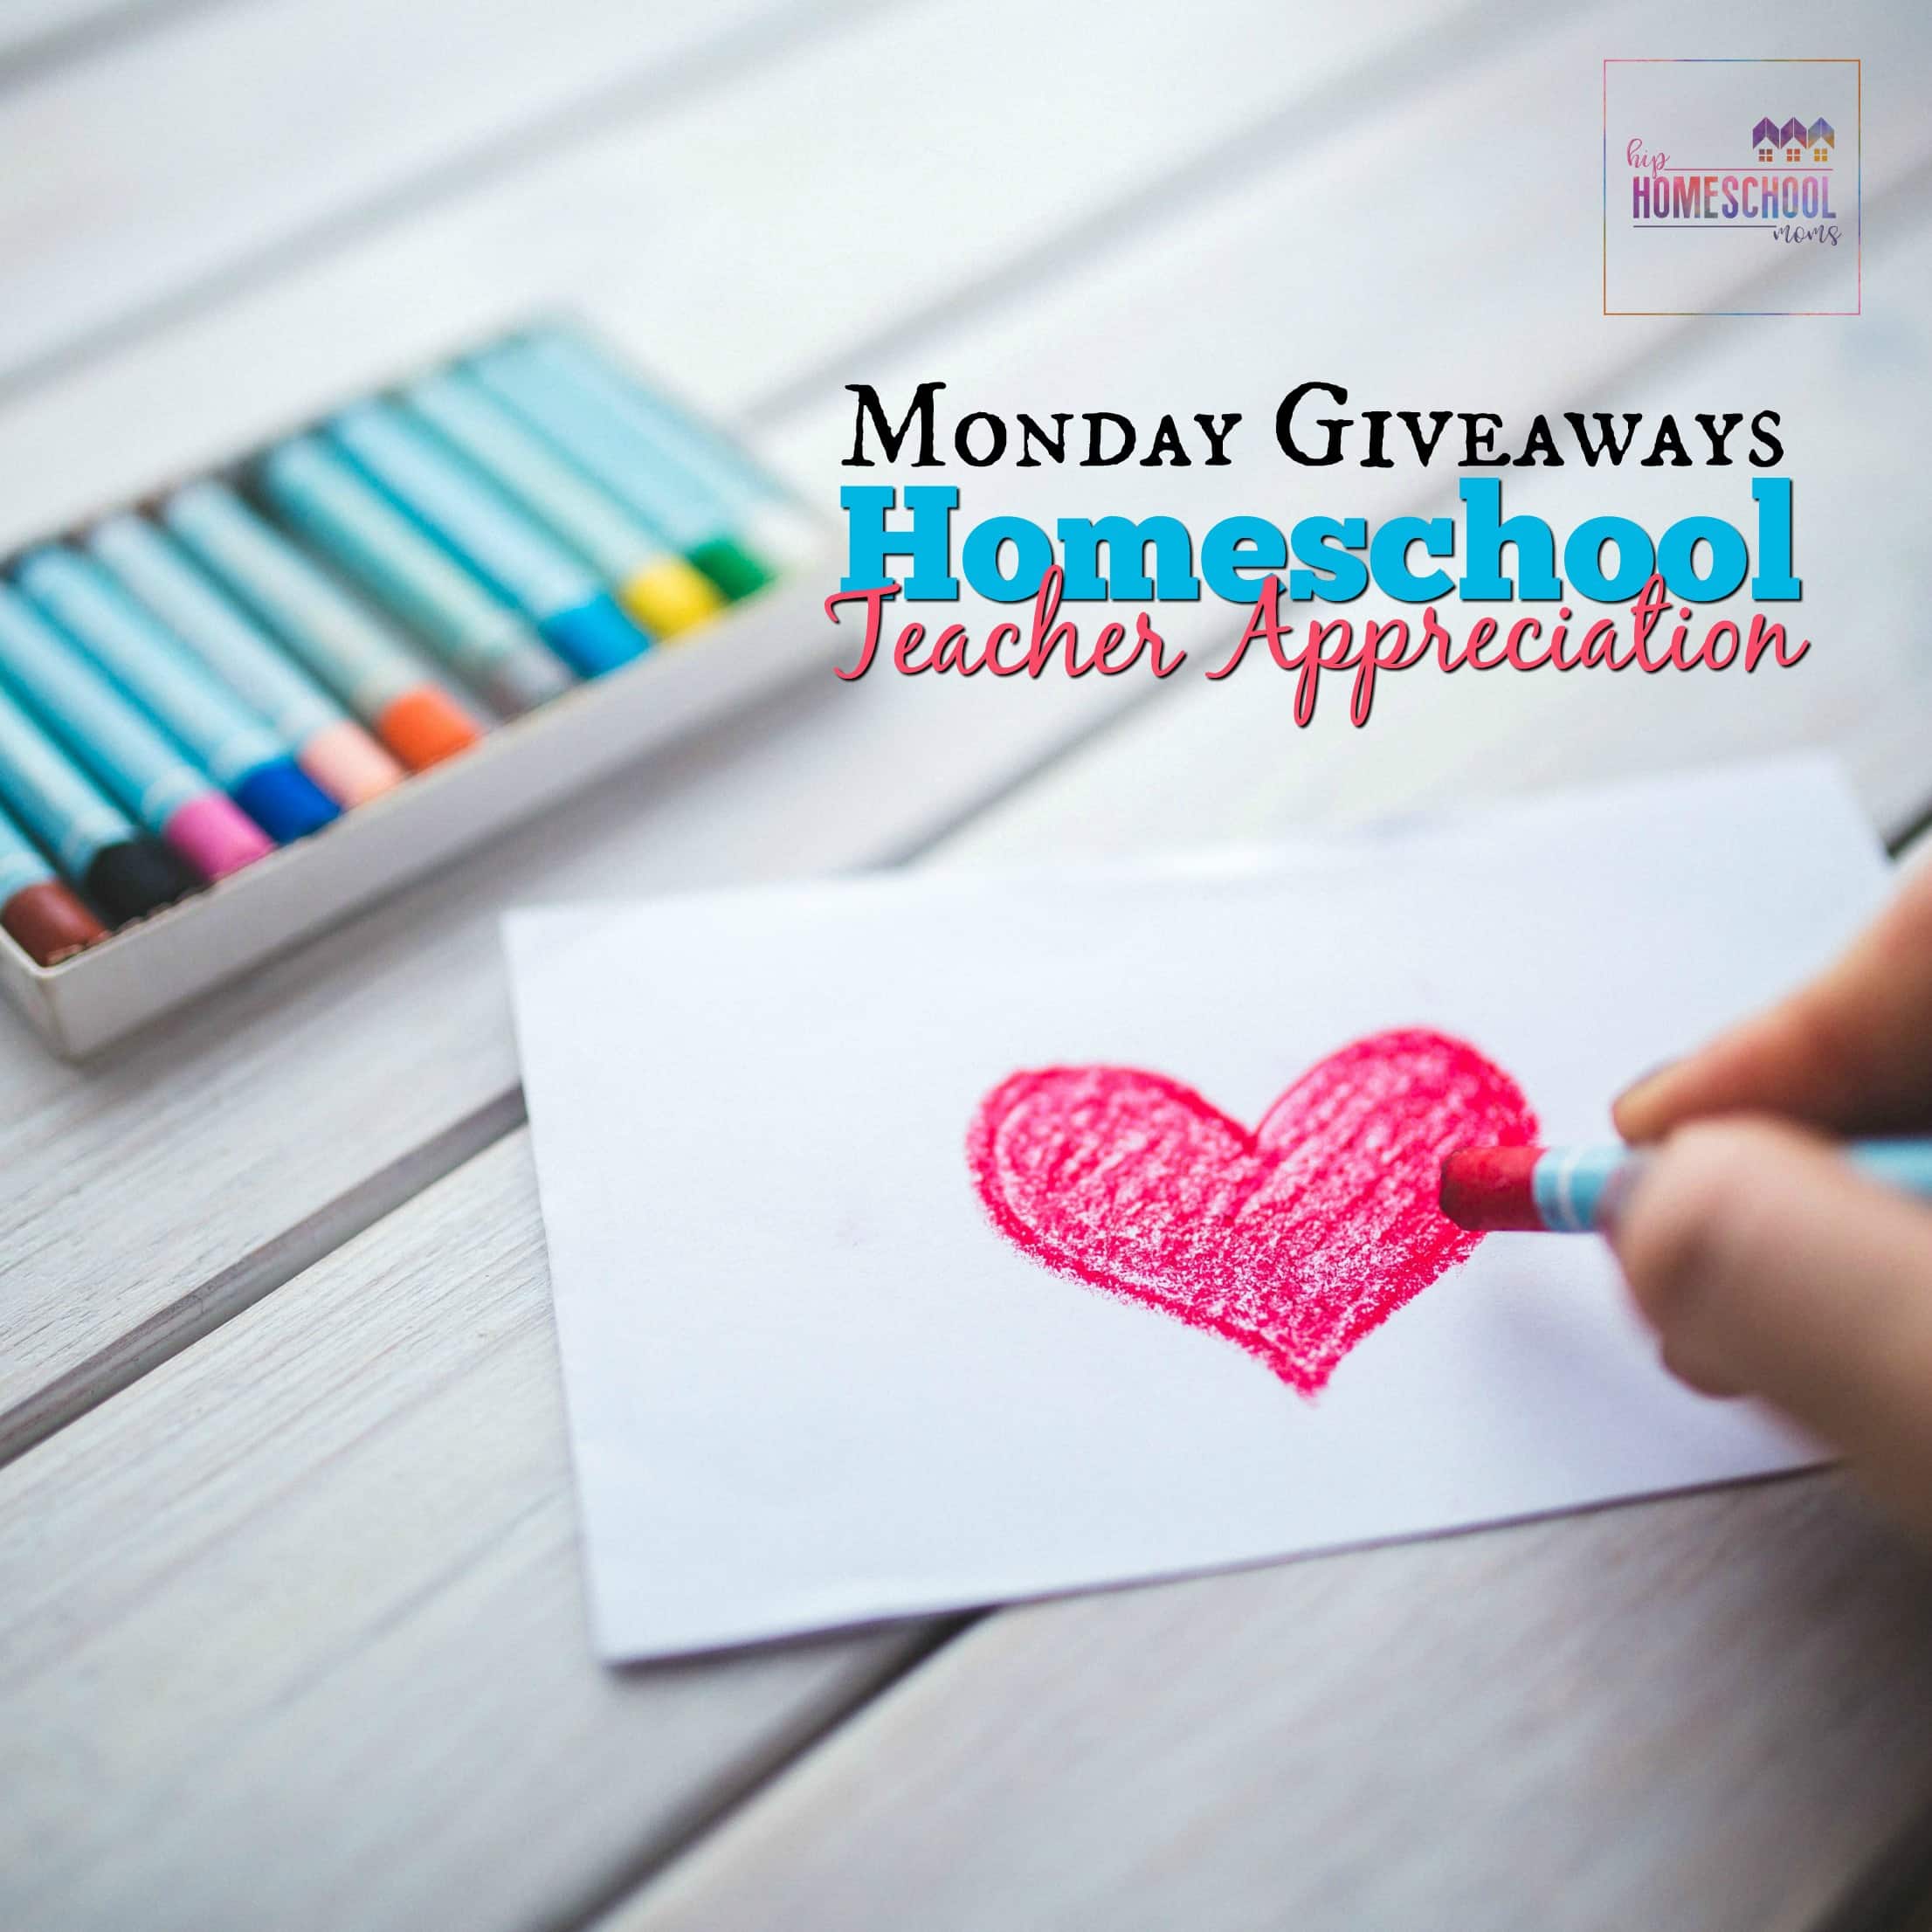 2017 Homeschool Teacher Appreciation Monday Giveaways